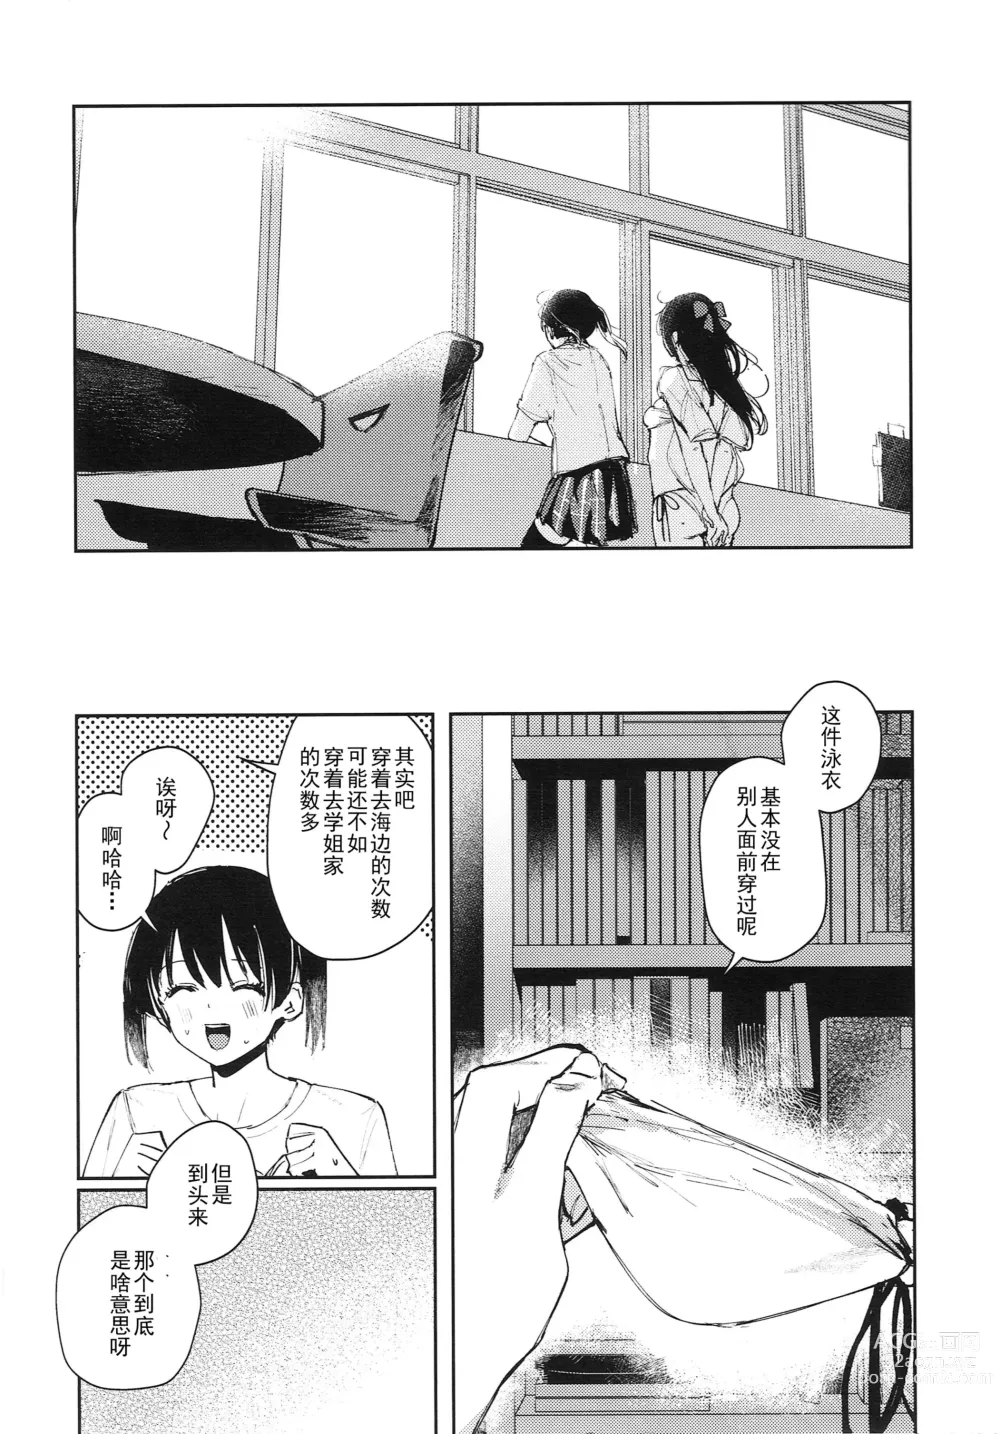 Page 28 of doujinshi Aoku Iroasero